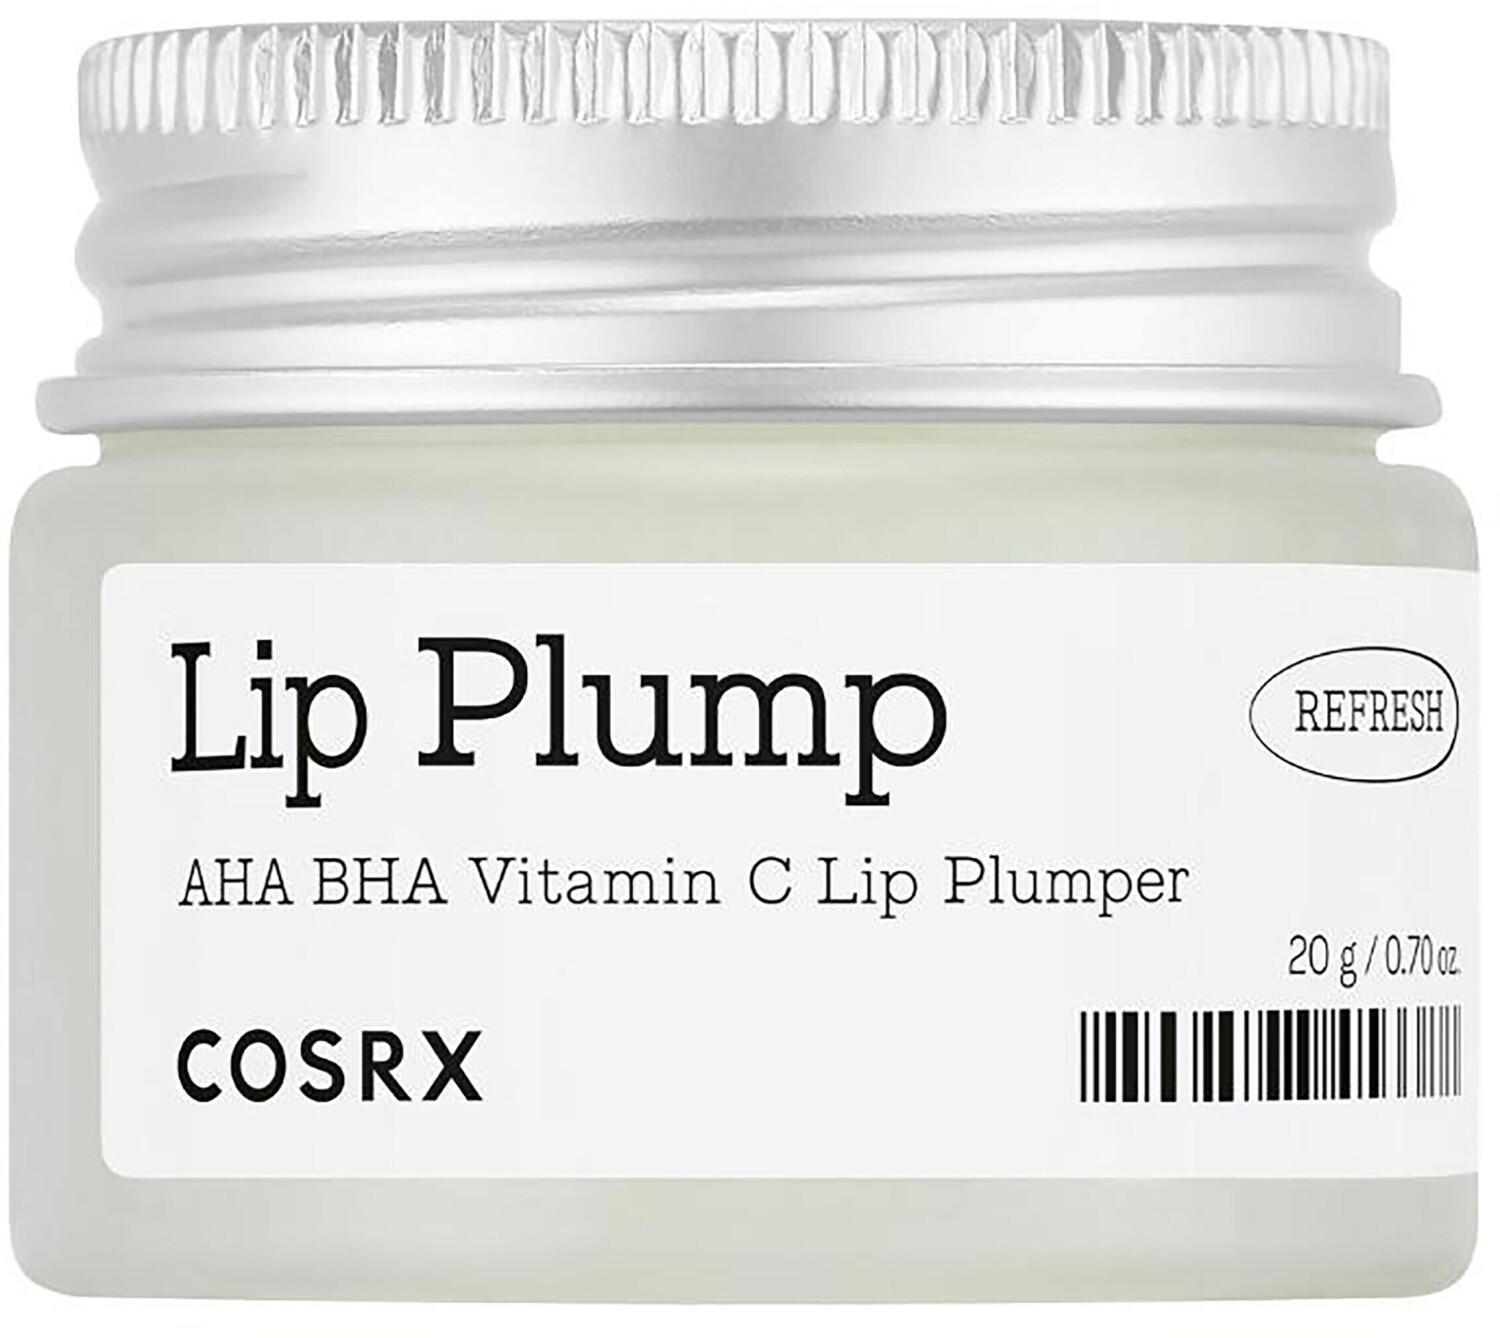 Cosrx AHA/BHA Refresh Vitamin C Lip Plumper (20g)